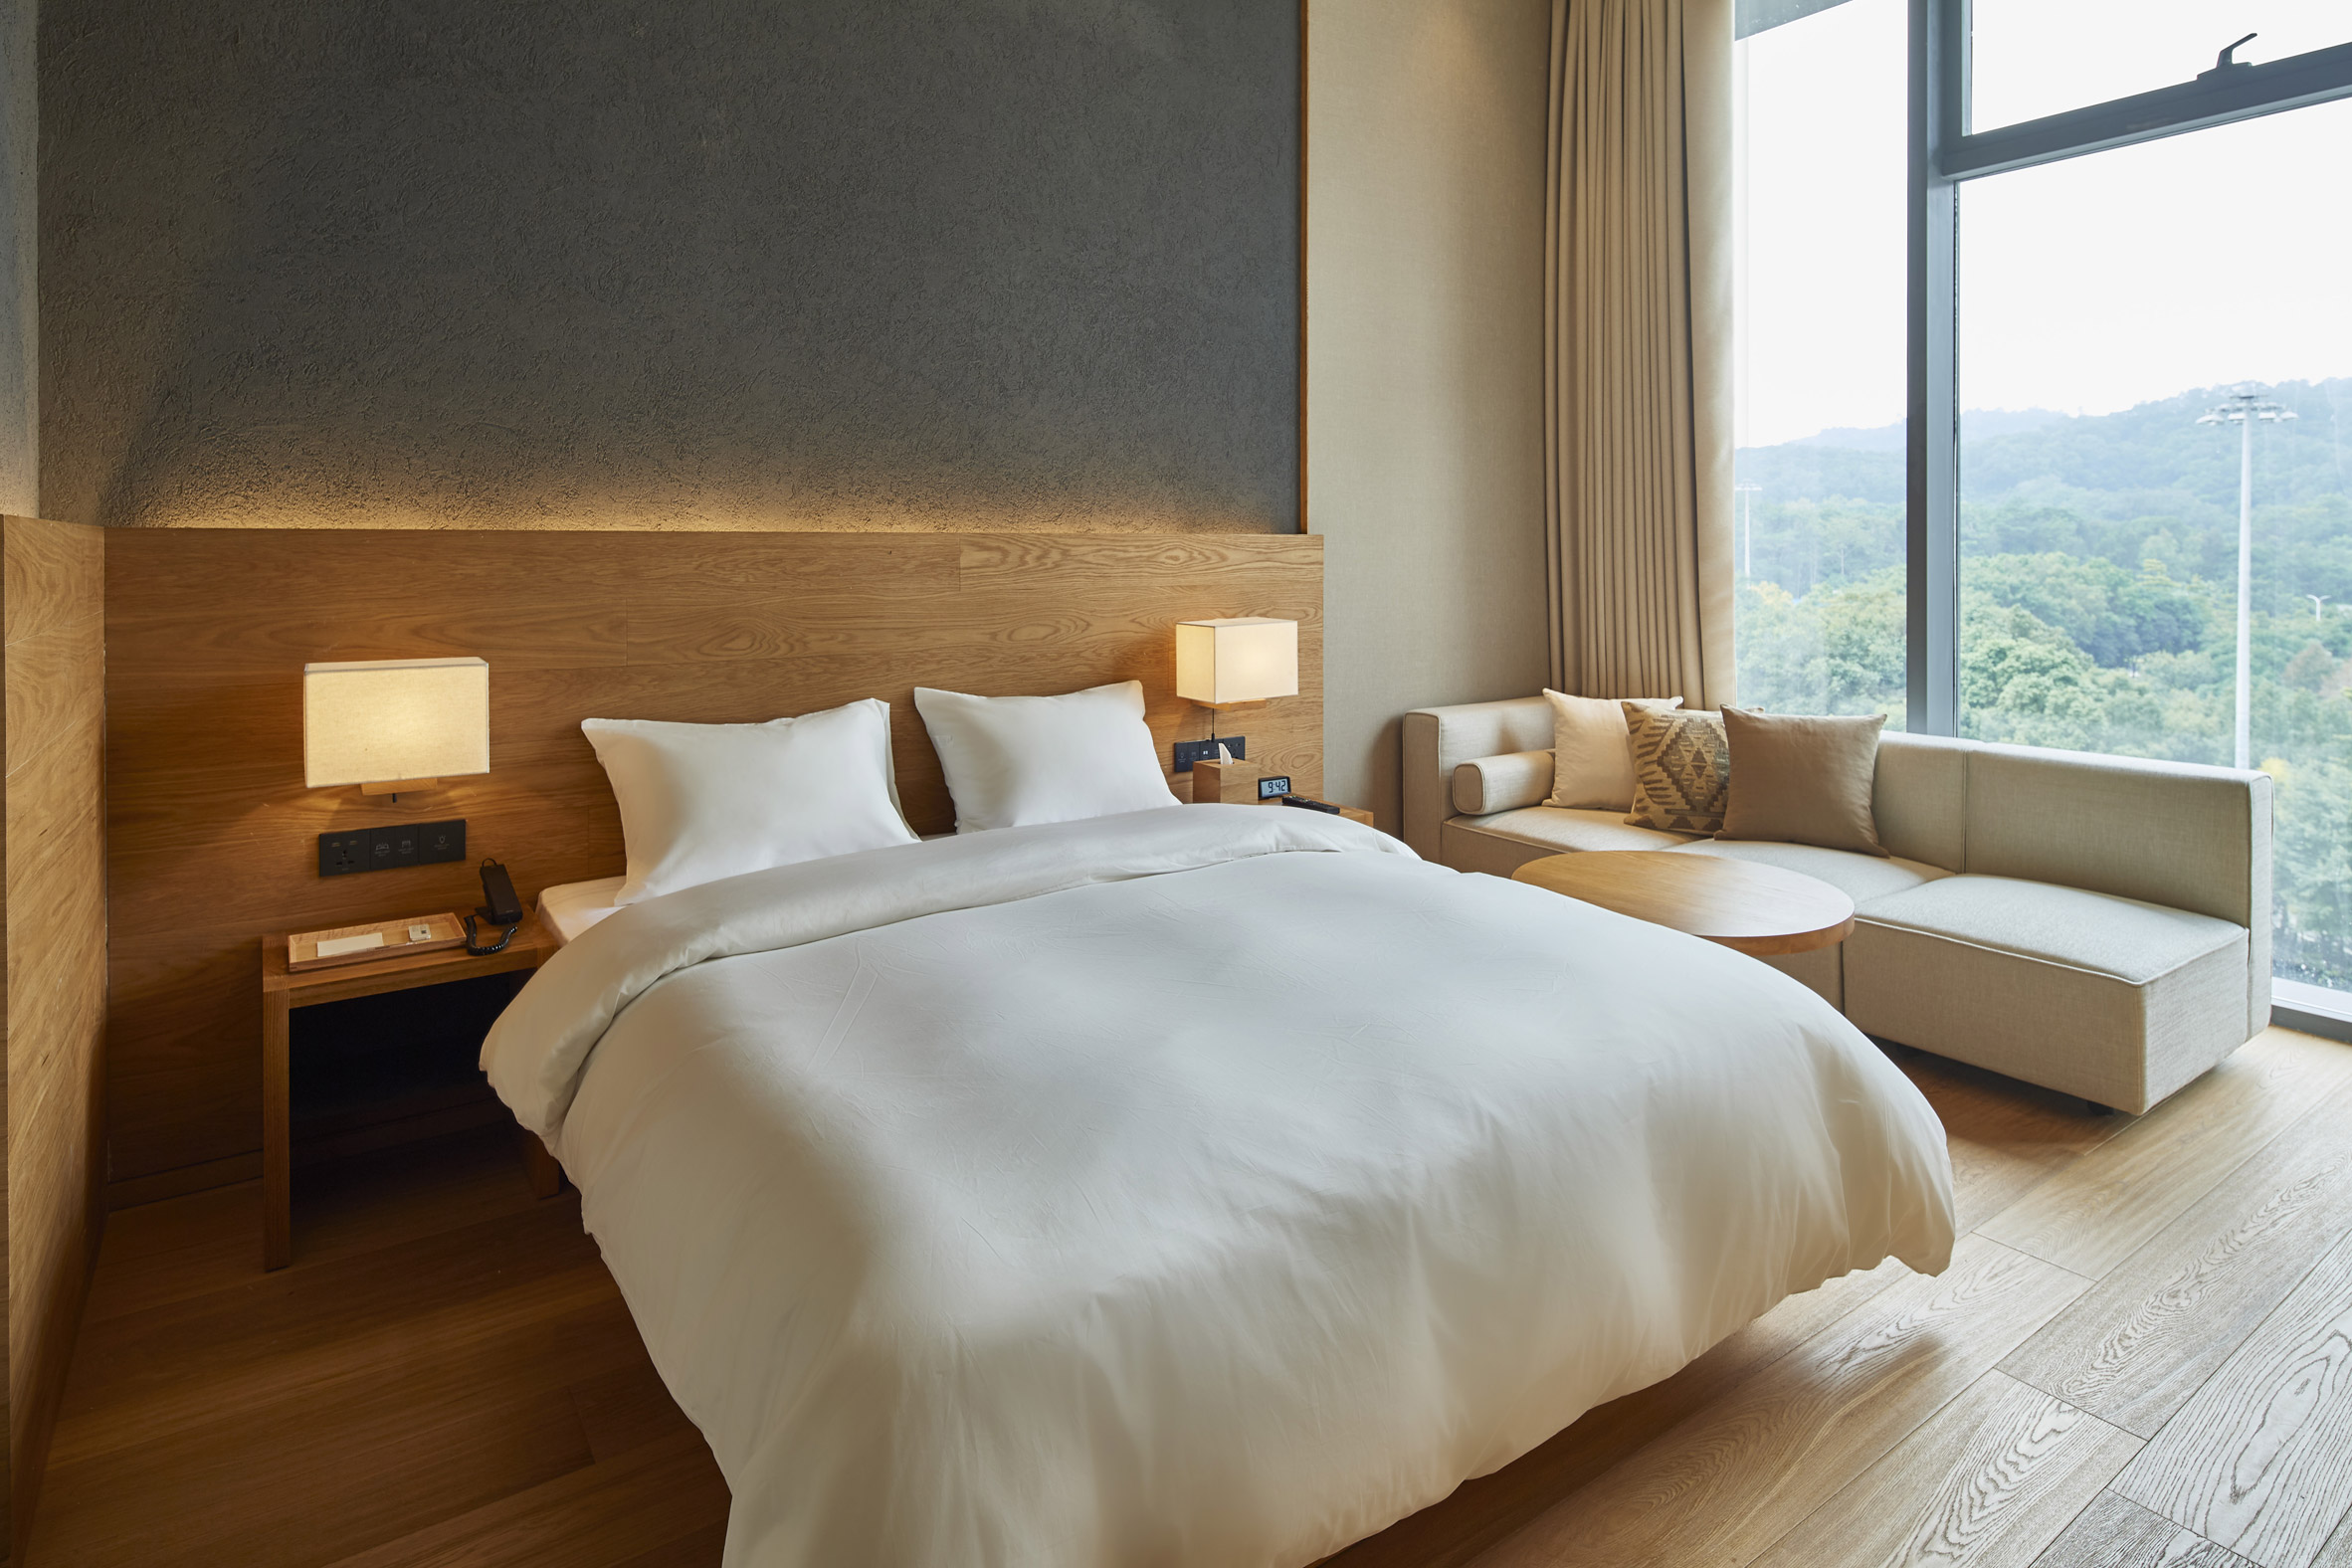 Muji offers first look inside its "anti-cheap" hotel in Shenzhen